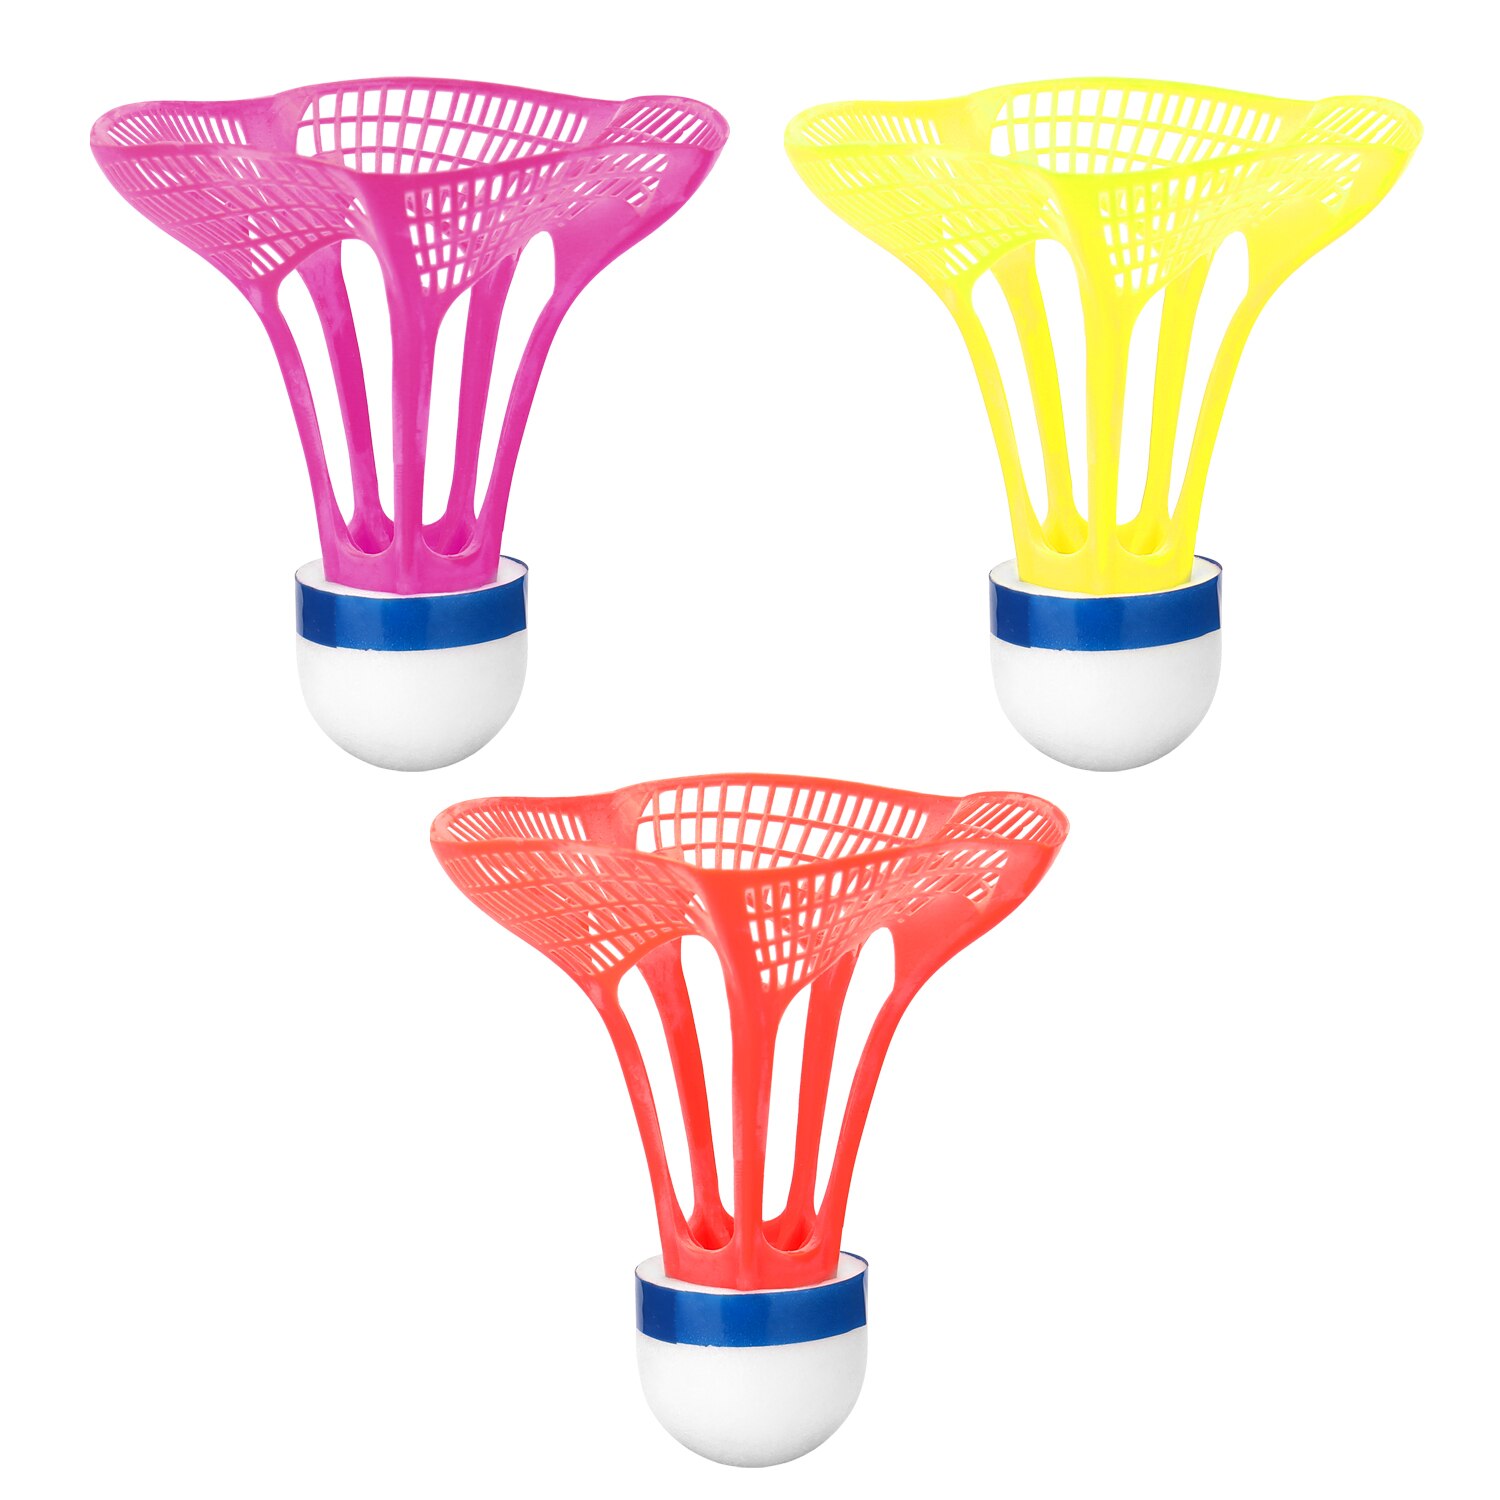 Originale airshuttle udendørs badminton airshuttle plastkugle nylon fjerball kugle stabil modstand 3 stk / pakke